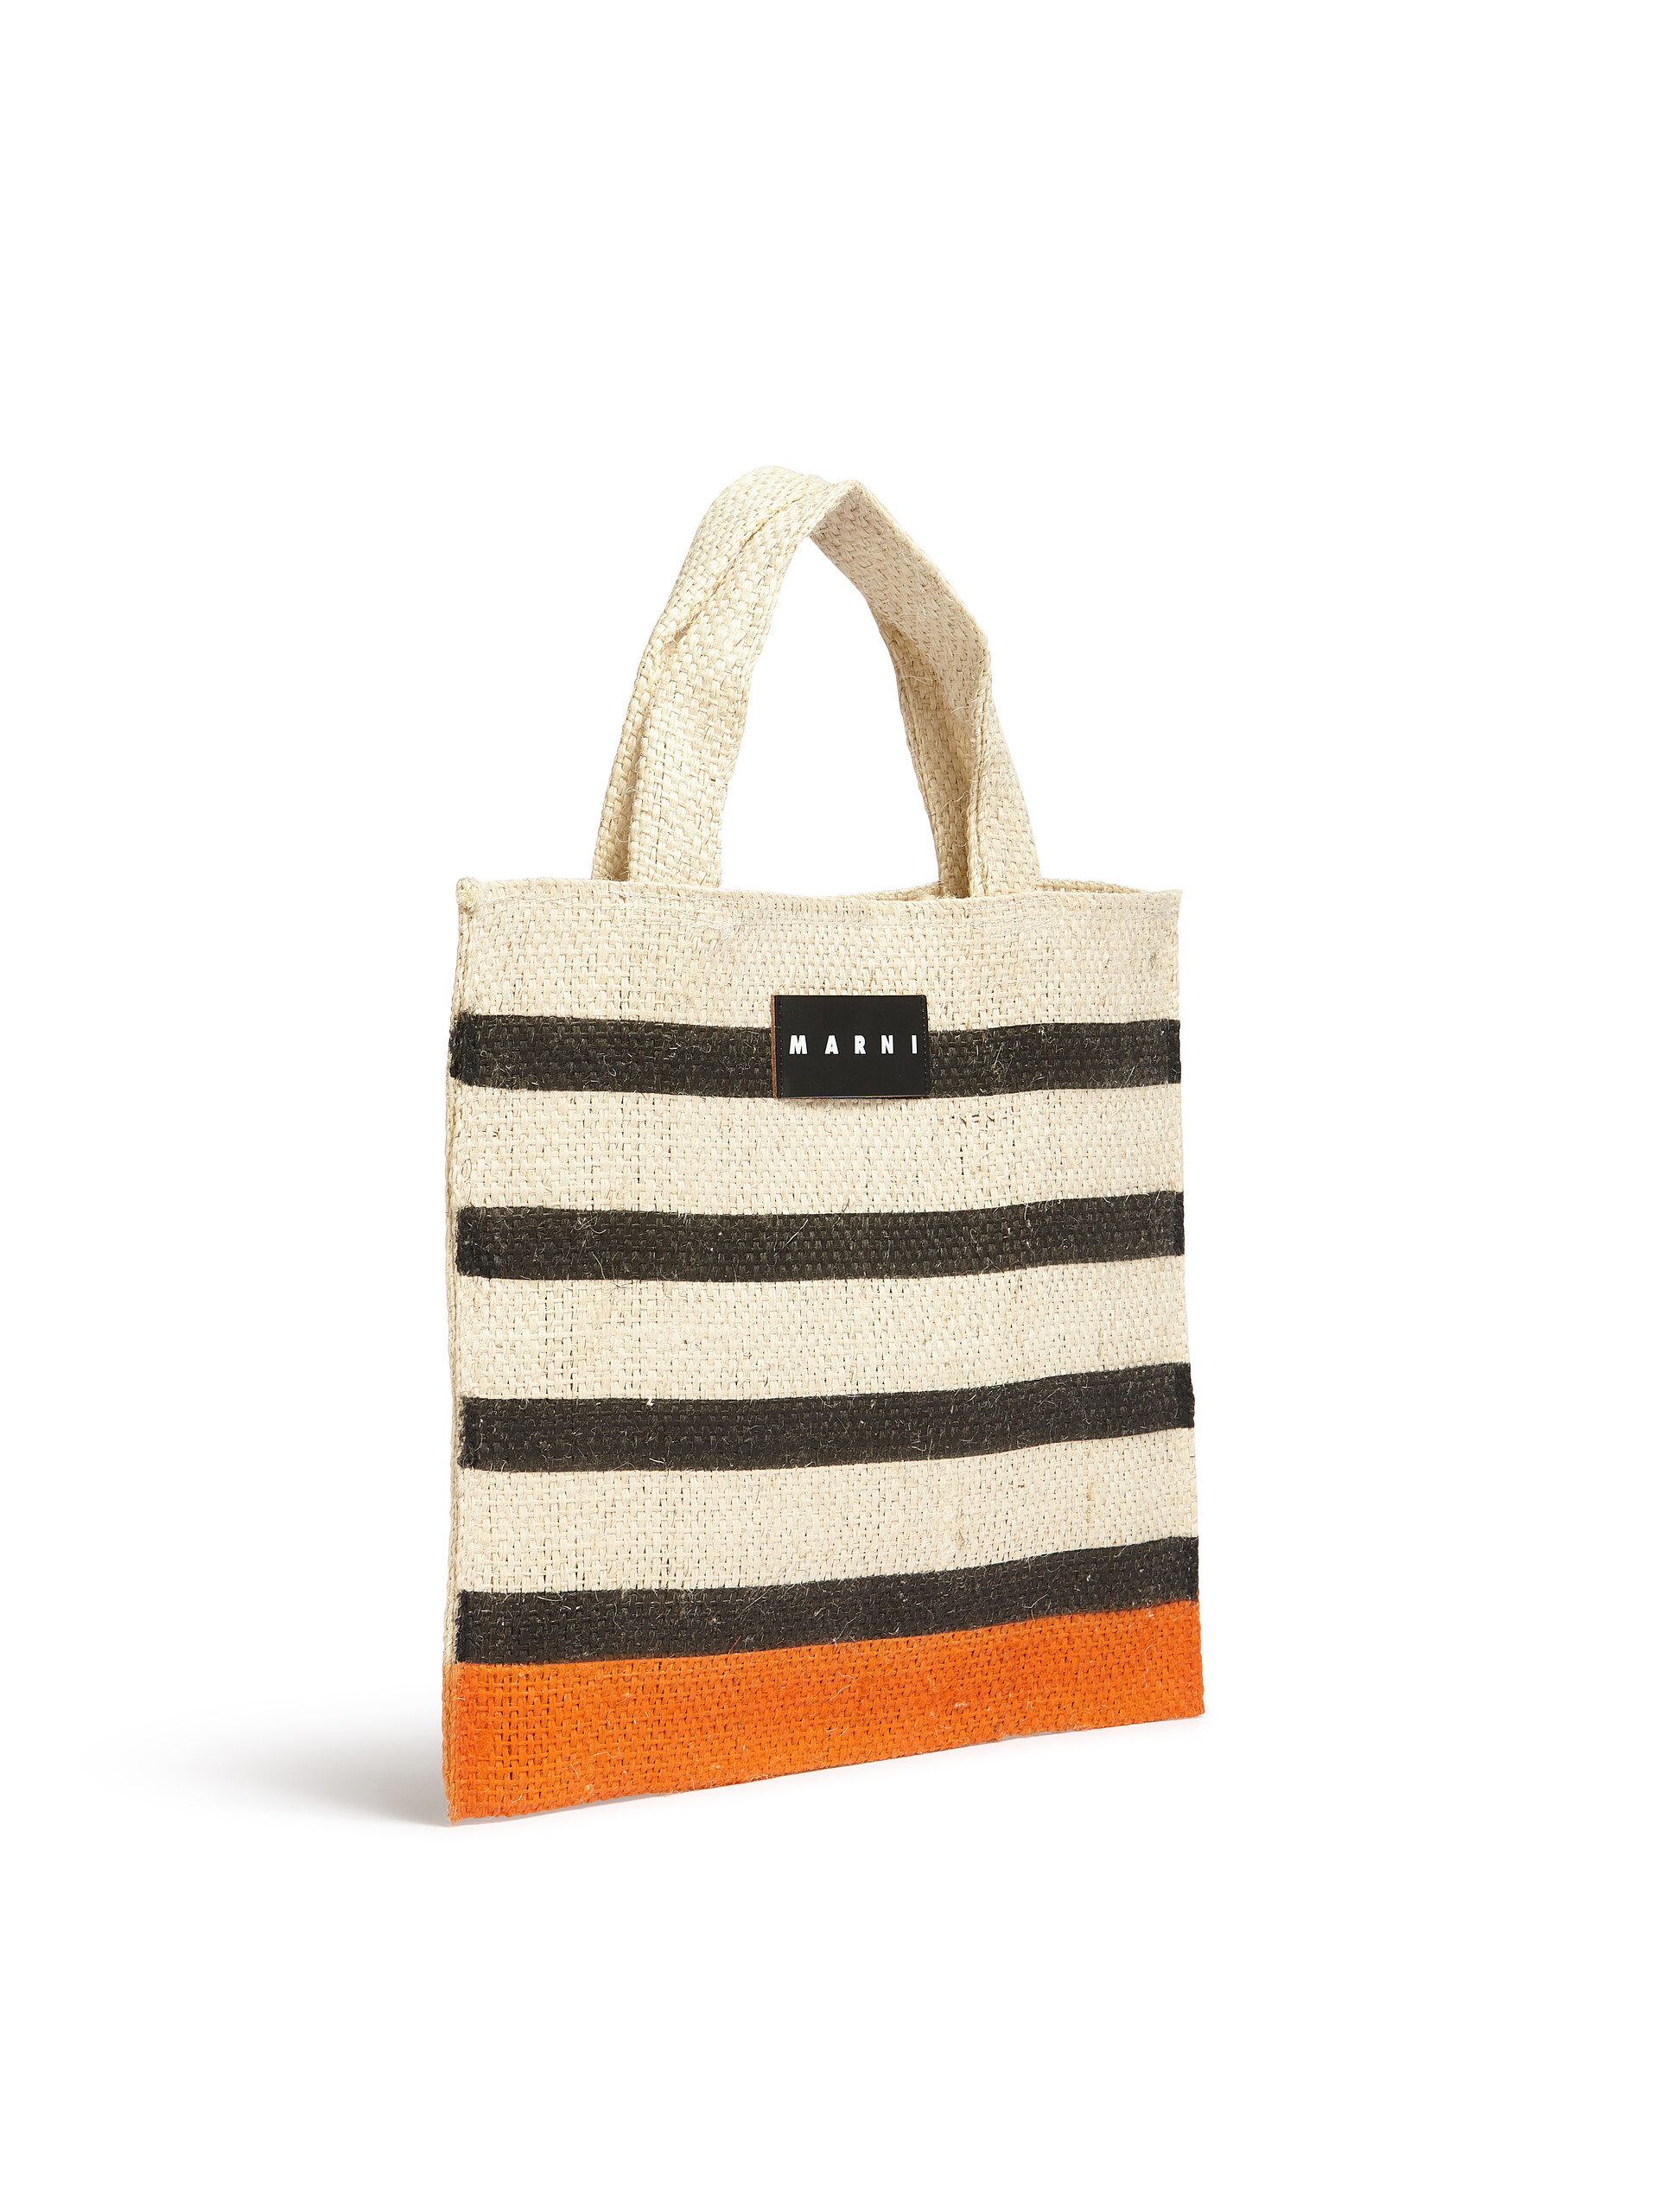 MARNI MARKET small bag in black and orange natural fiber - Bags - Image 2